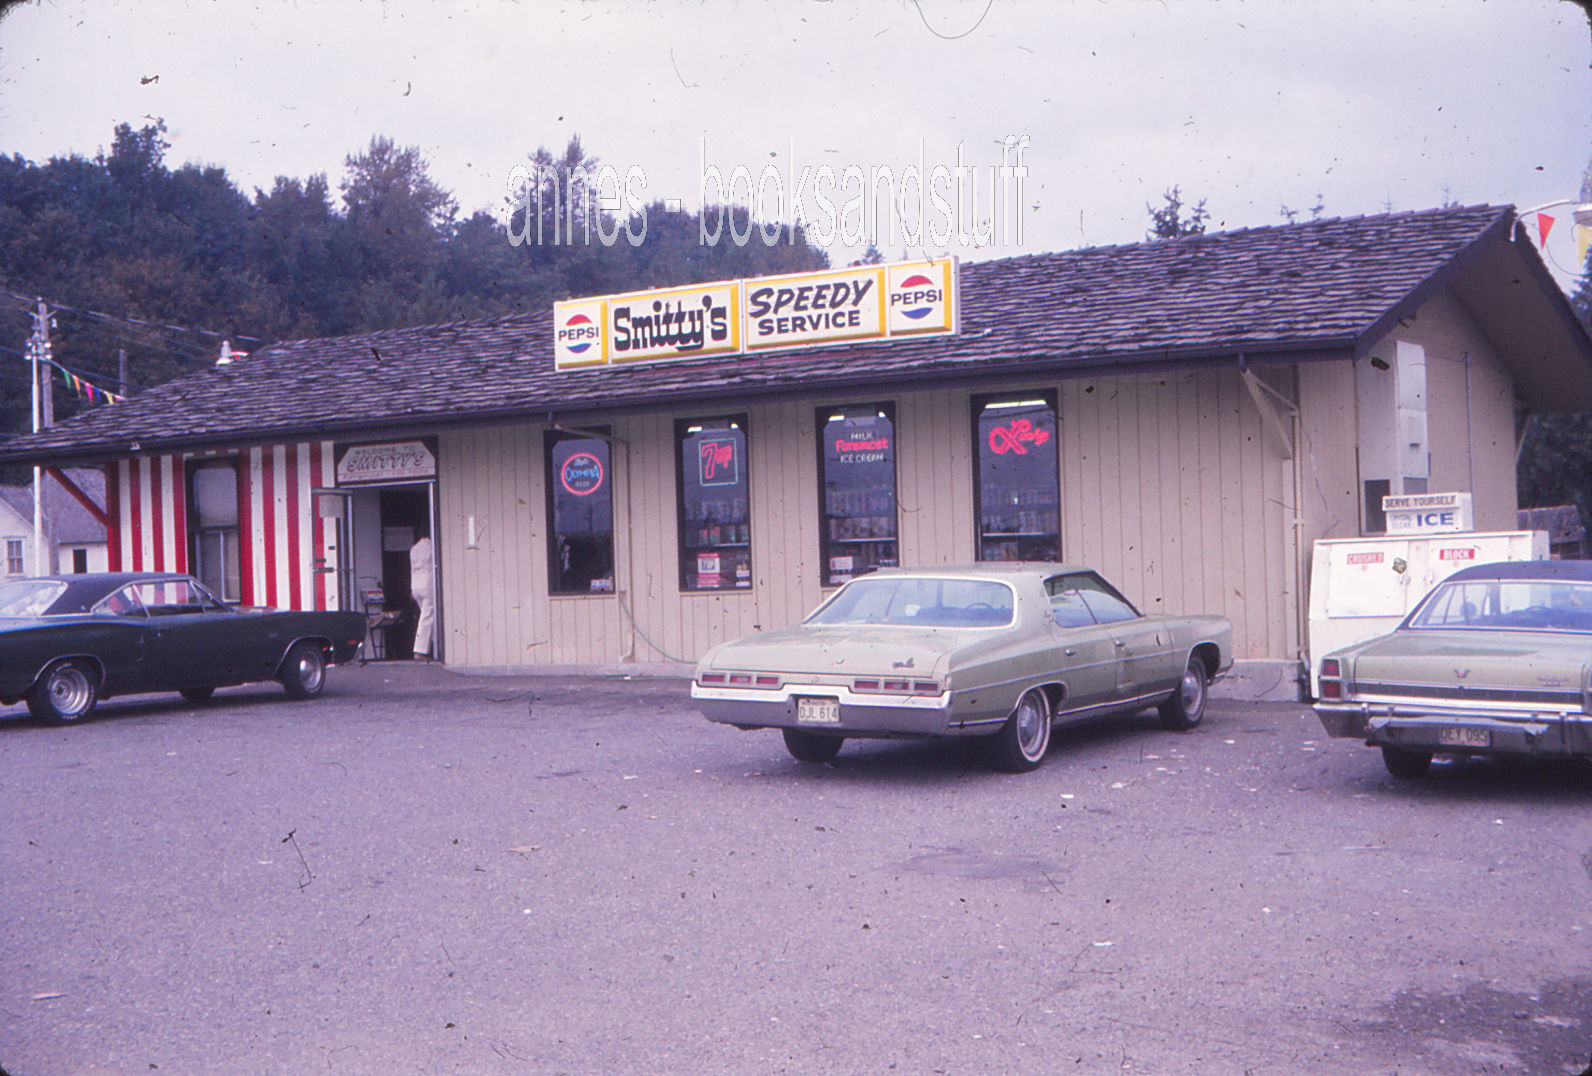 35 mm color slide * Kodak Ekta chrome 1972 SMITTY'S SPEEDY SERVICE location?